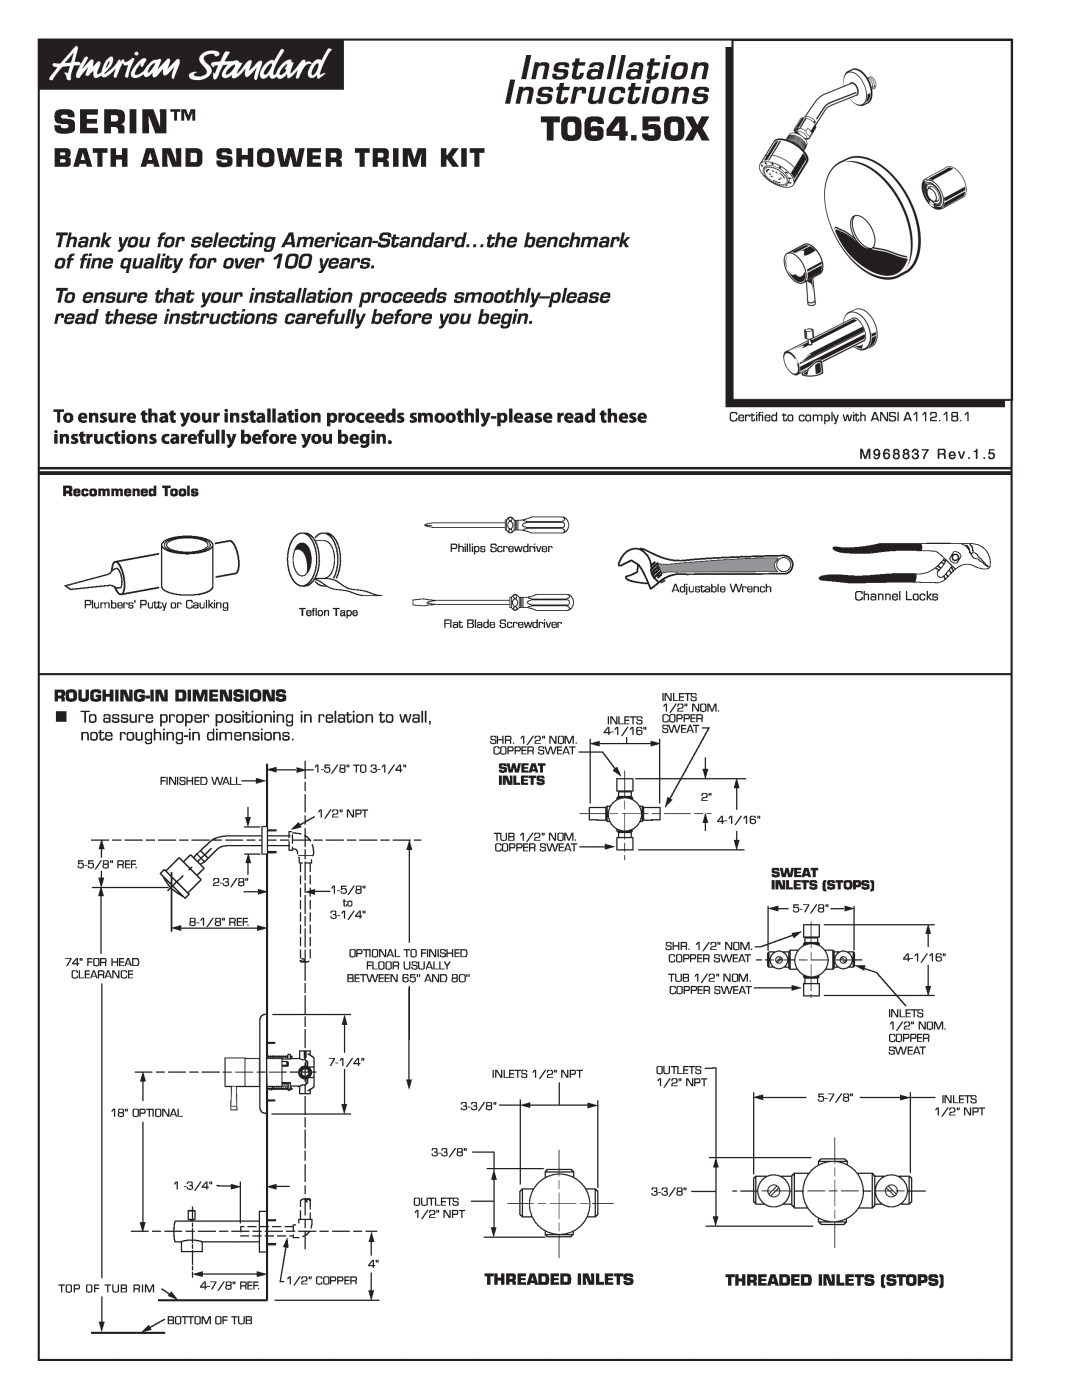 American Standard BATH AND SHOWER TRIM KIT, M968837 installation instructions Installation Instructions, SERINT064.50X 